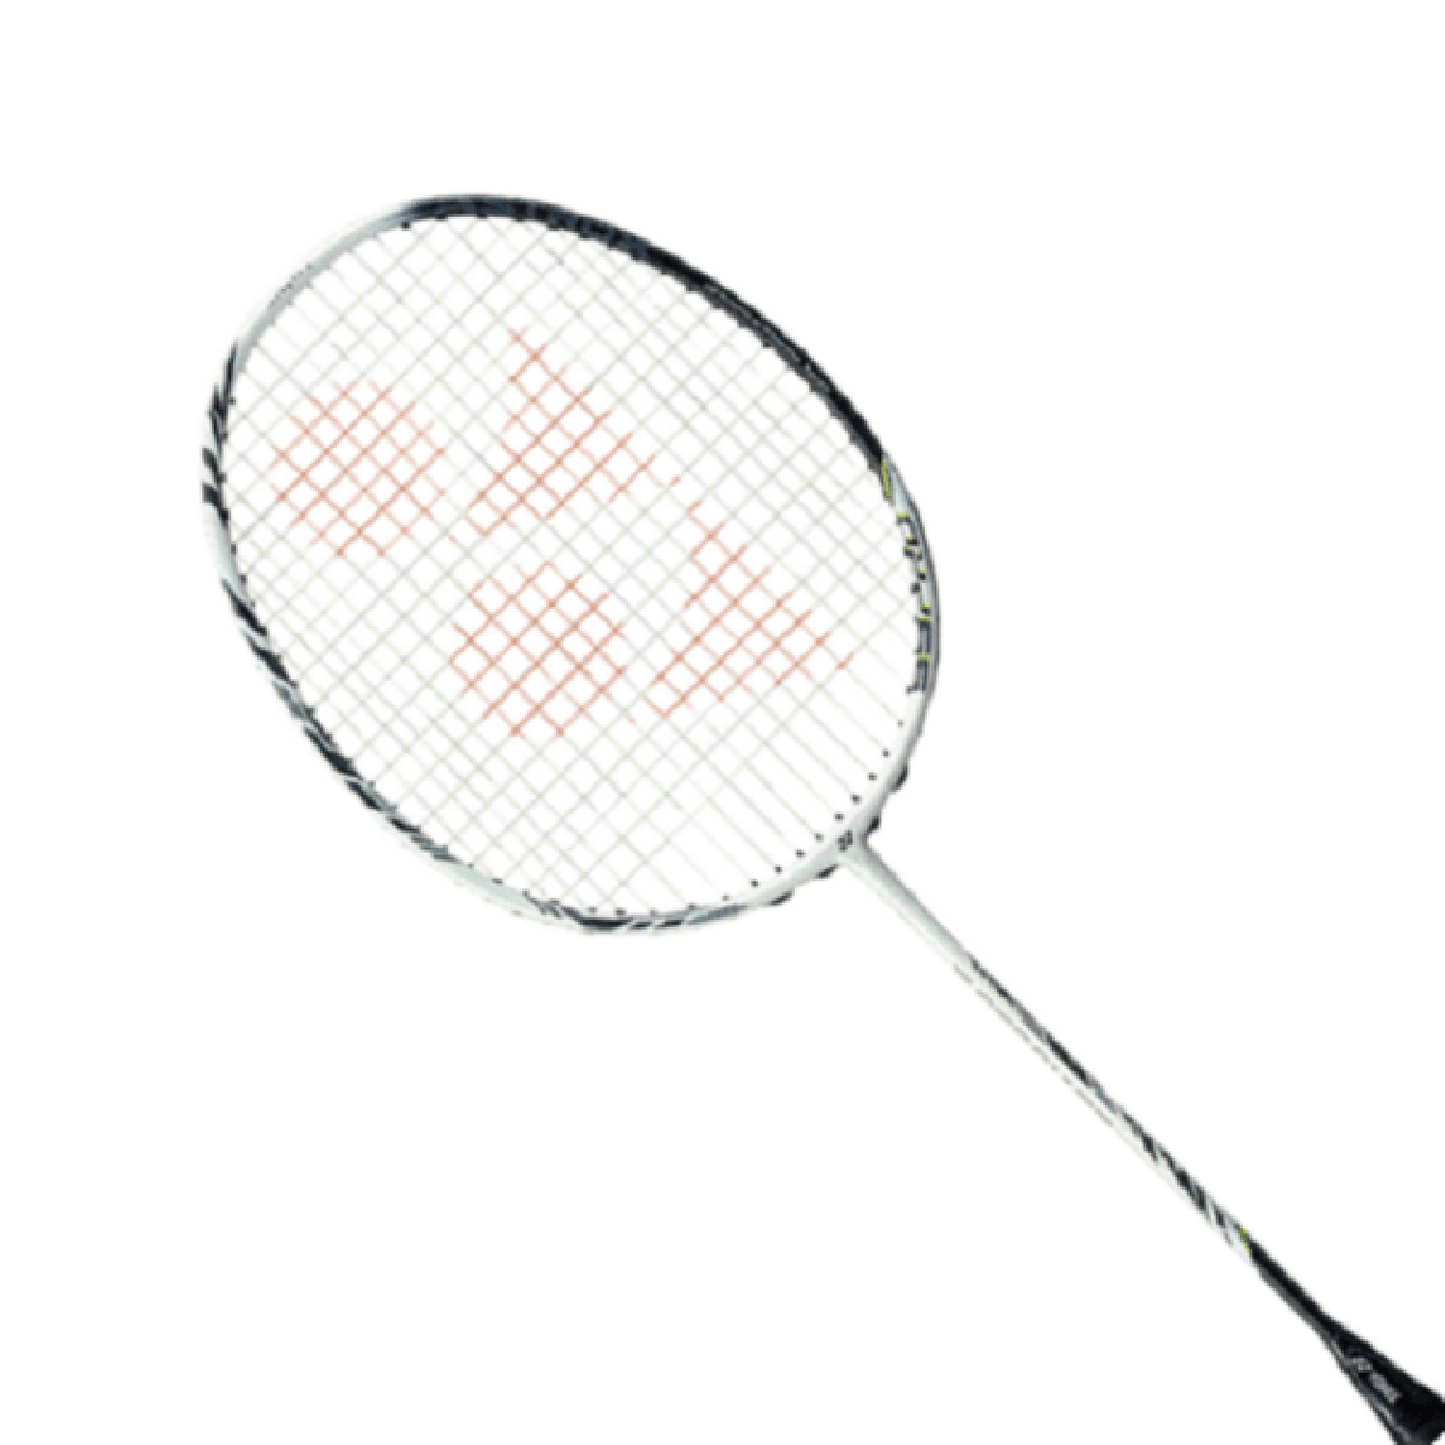 Yonex Astrox 99 Game Strung Badminton Racquet - Best Price online Prokicksports.com